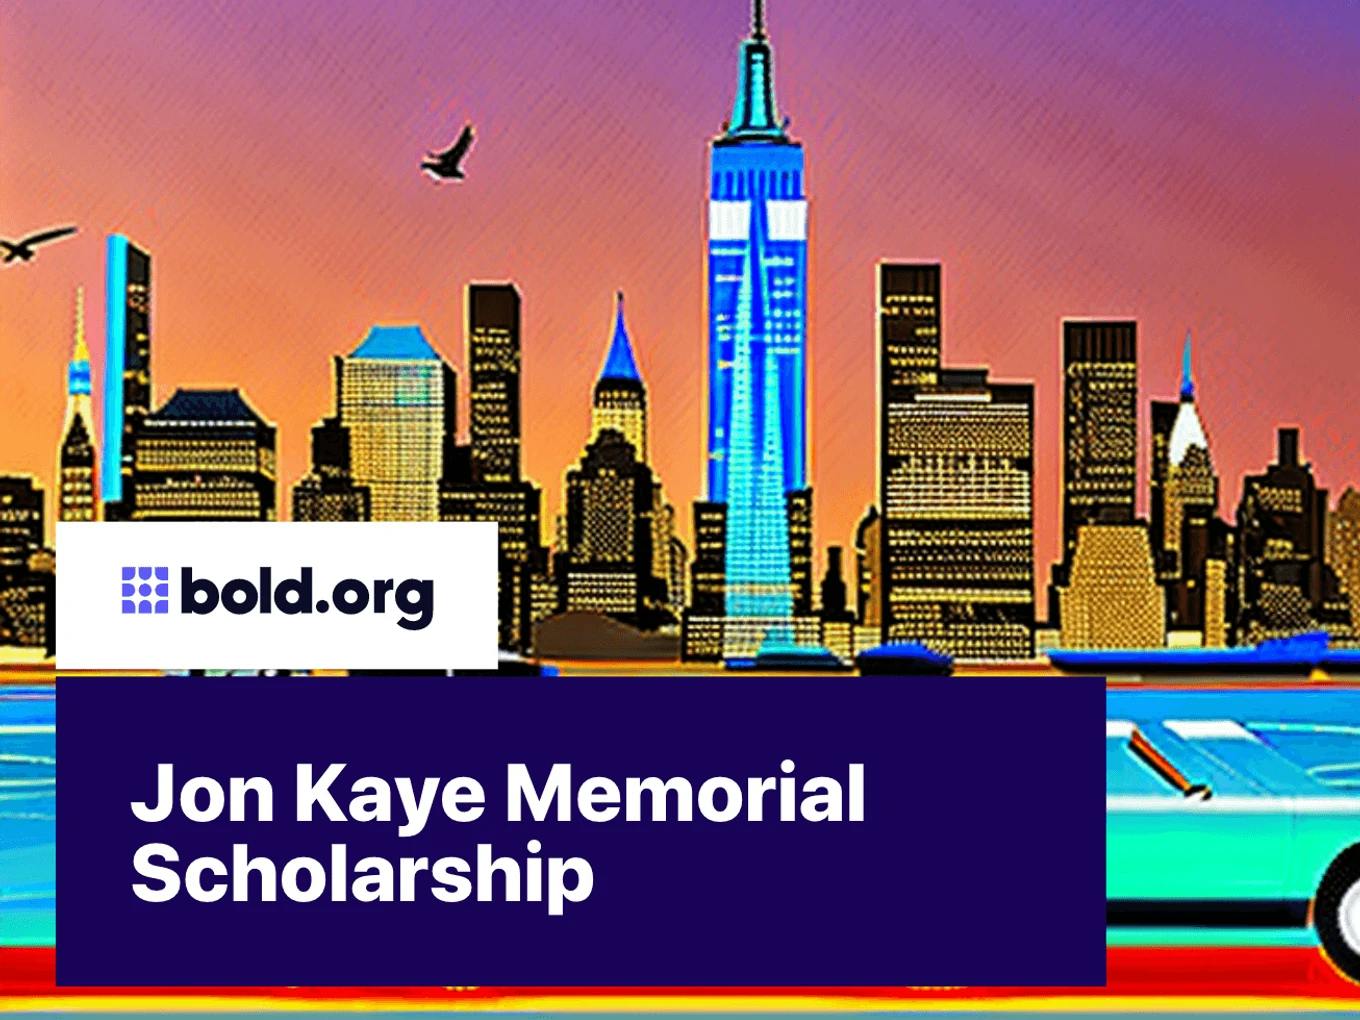 Jon Kaye Memorial Scholarship